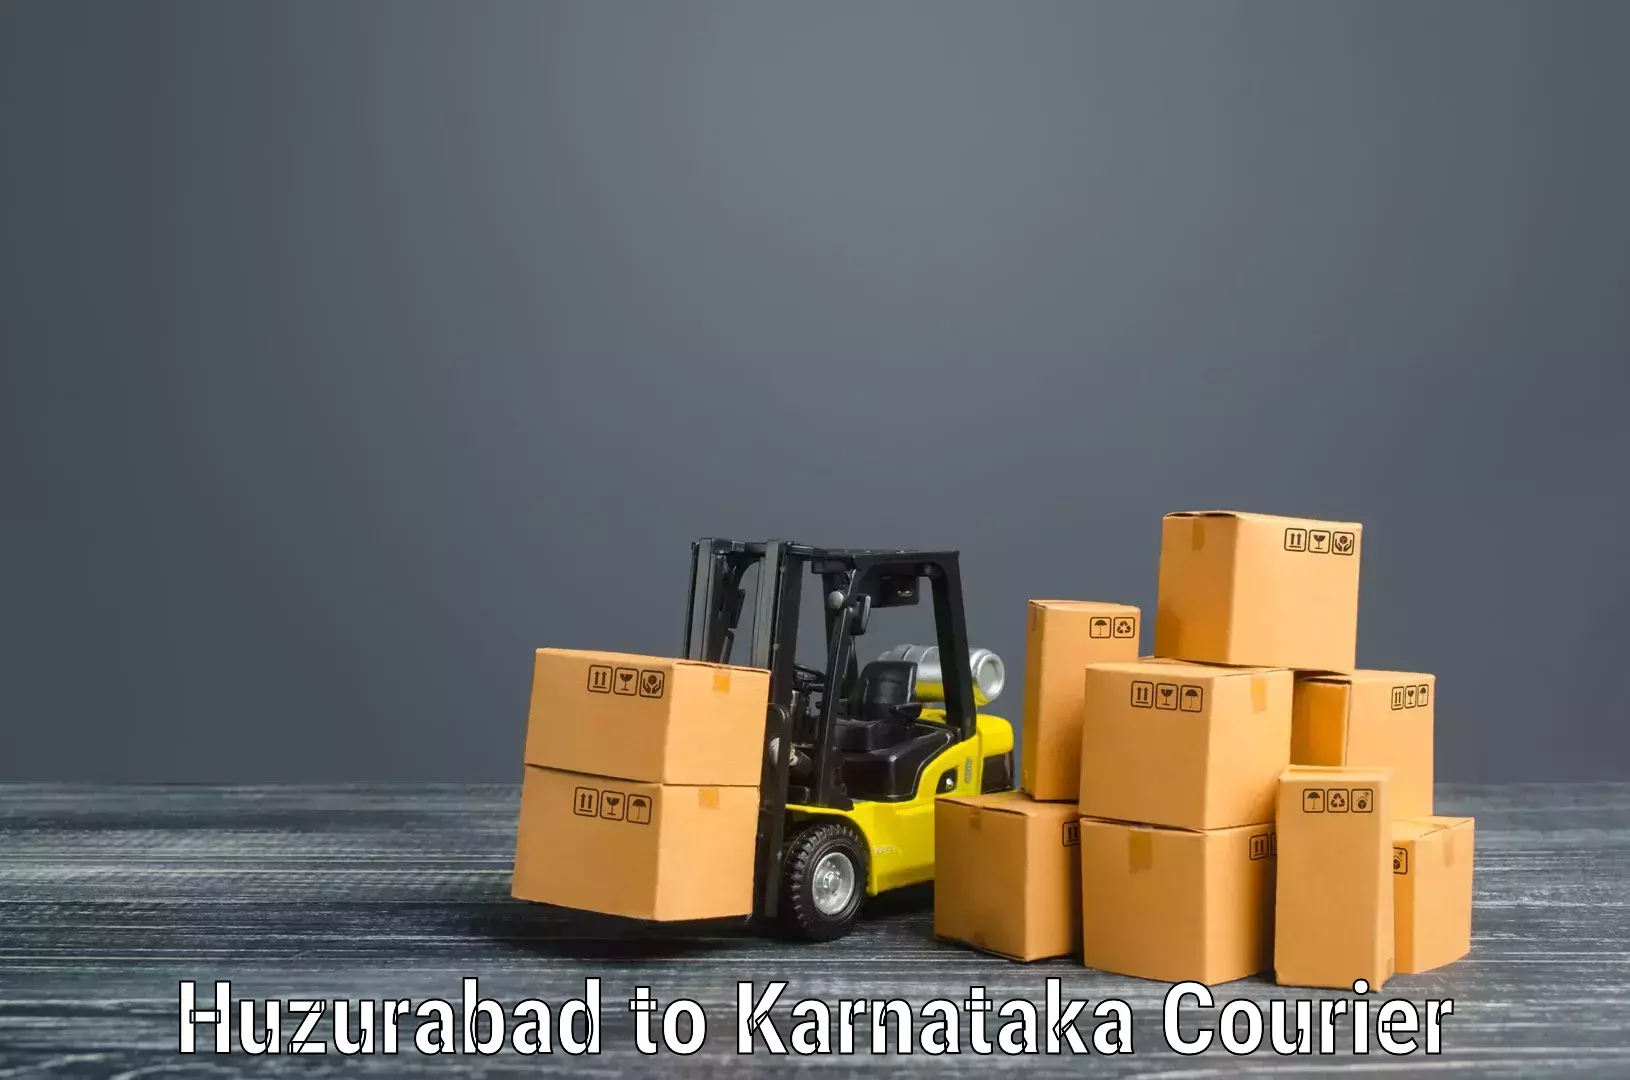 Cost-effective moving options Huzurabad to Karnataka